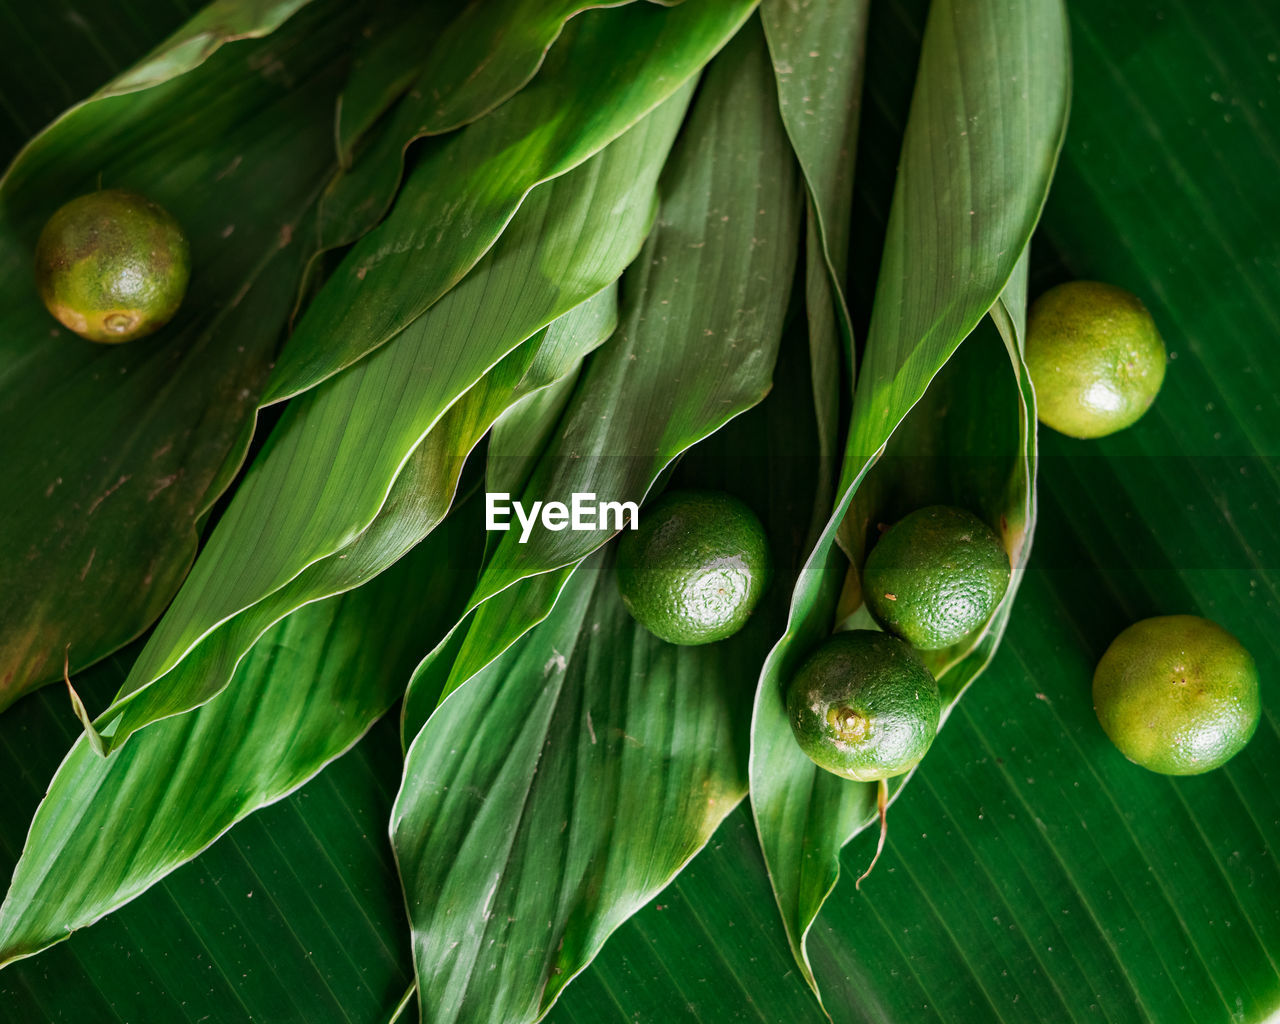 Asian food ingredients calamansi and tumeric leaves banana leaf background.